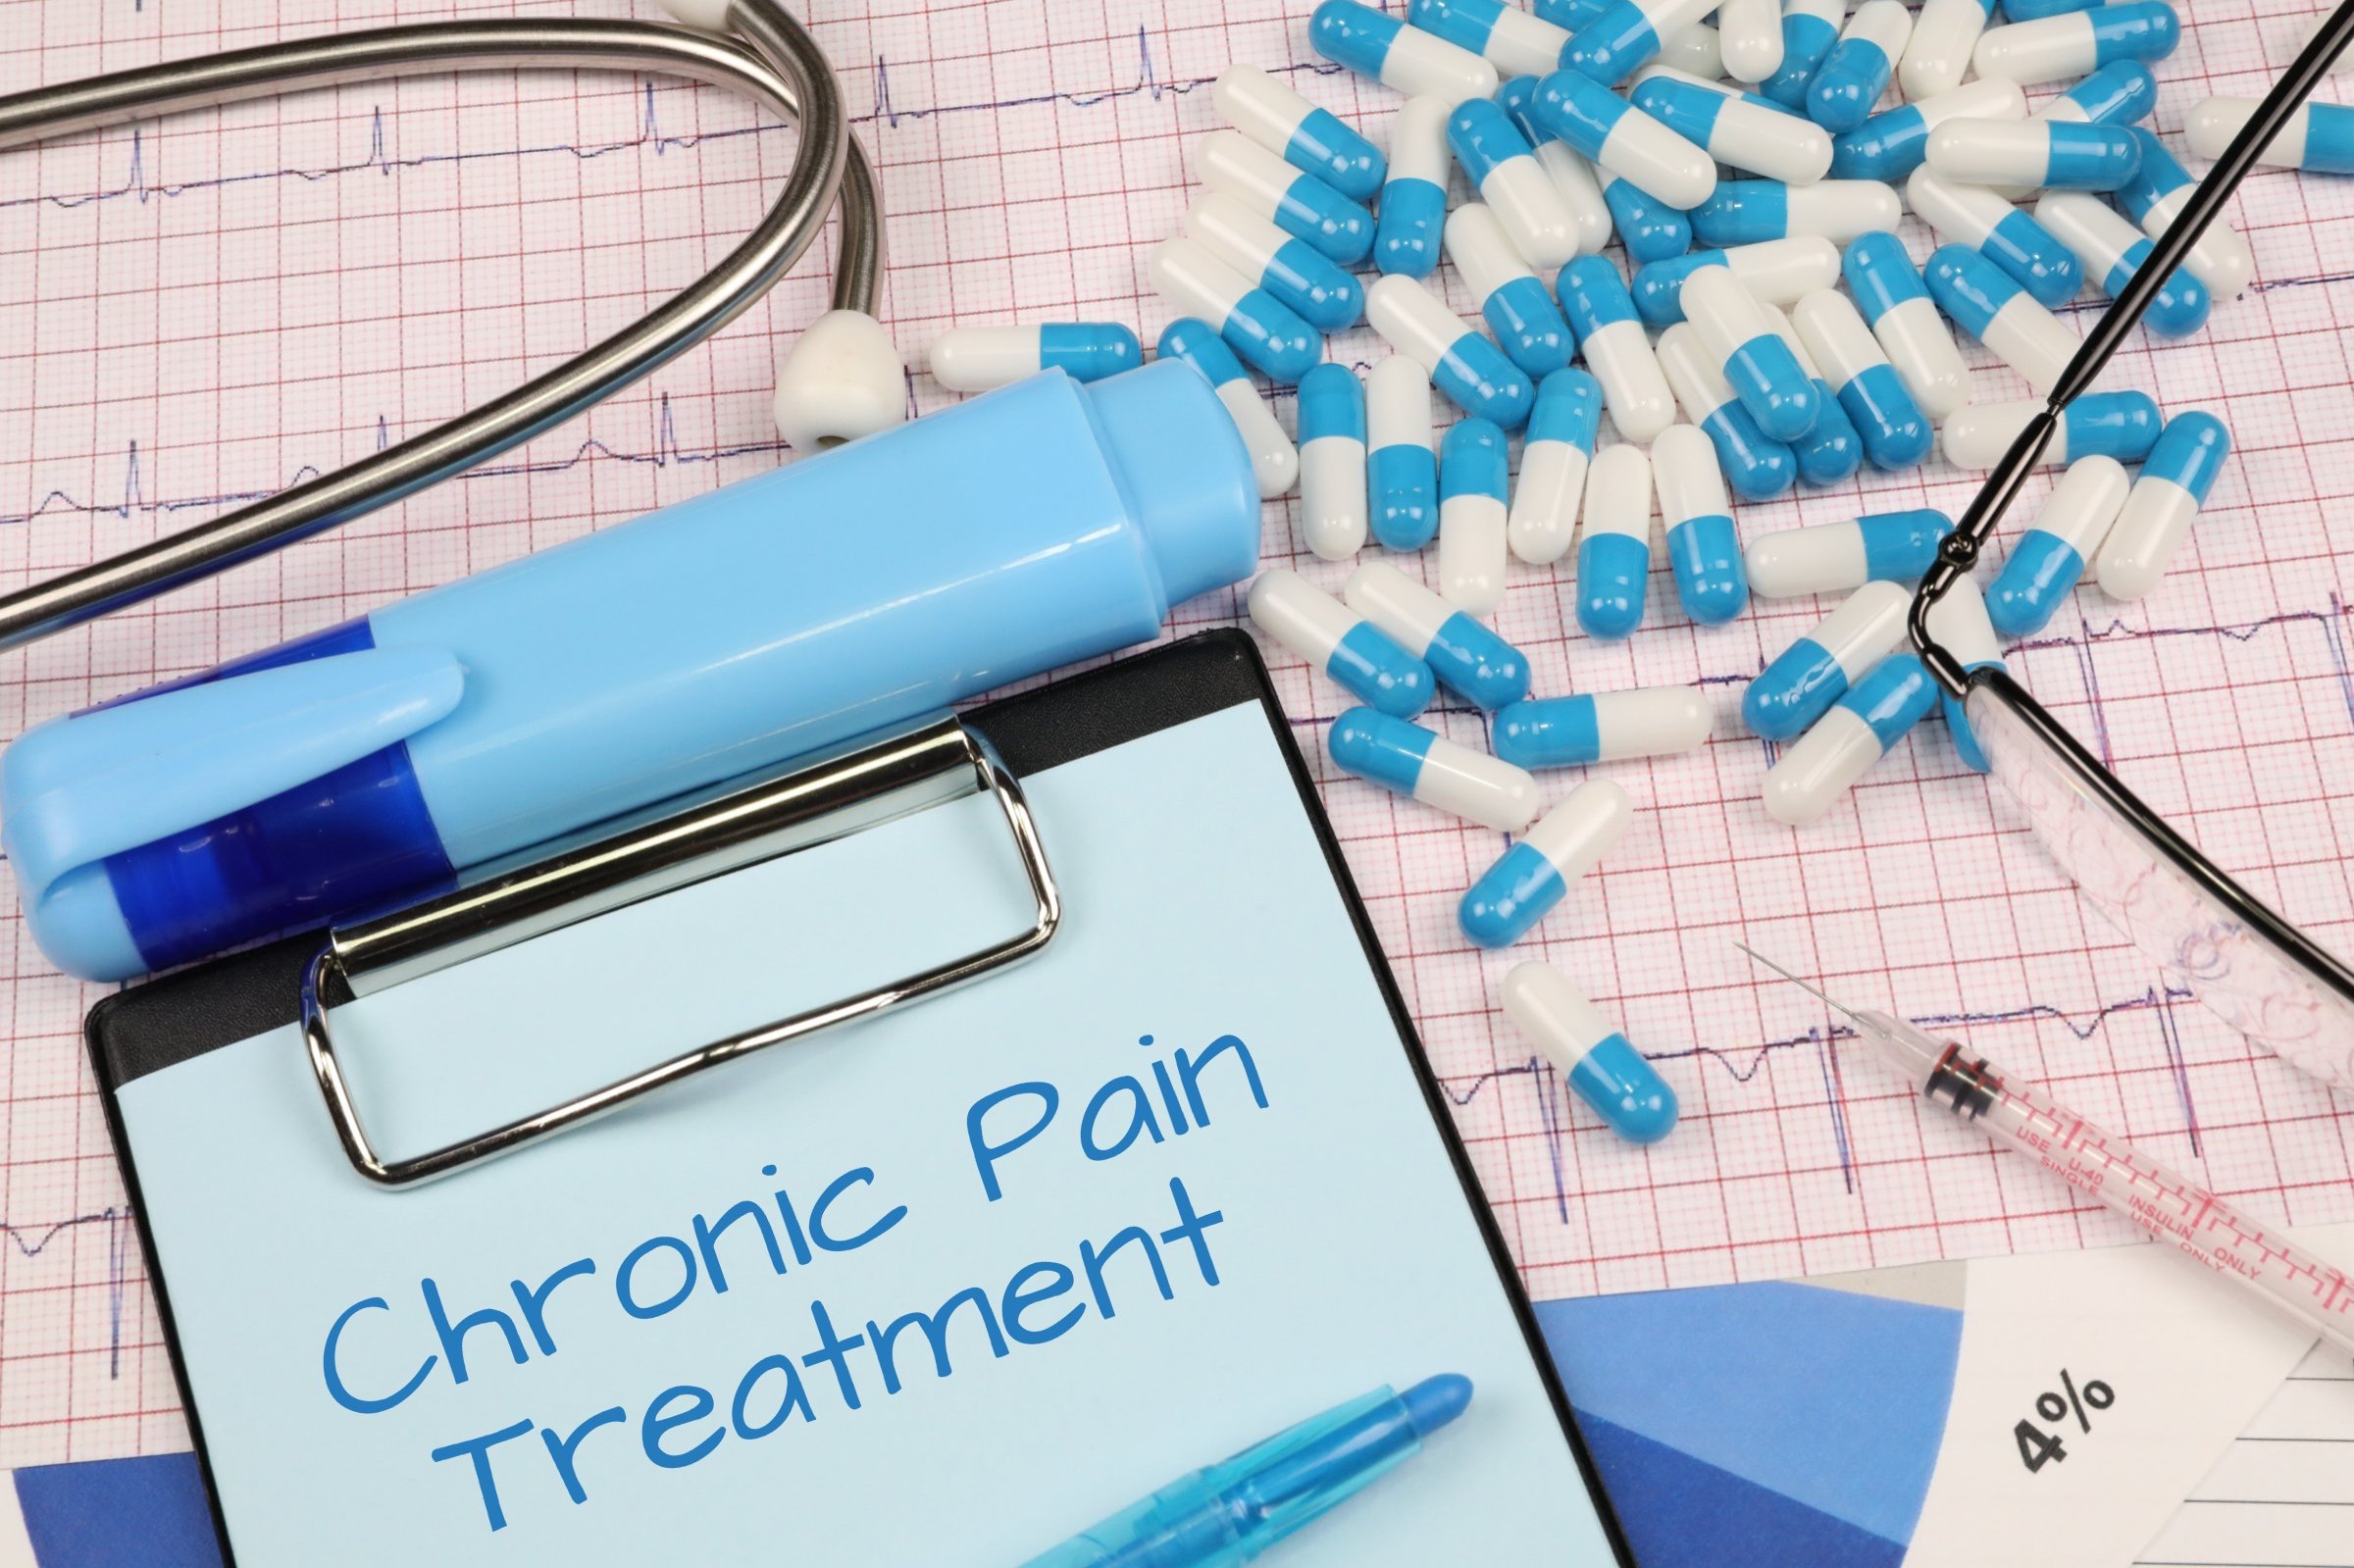 chronic pain treatment